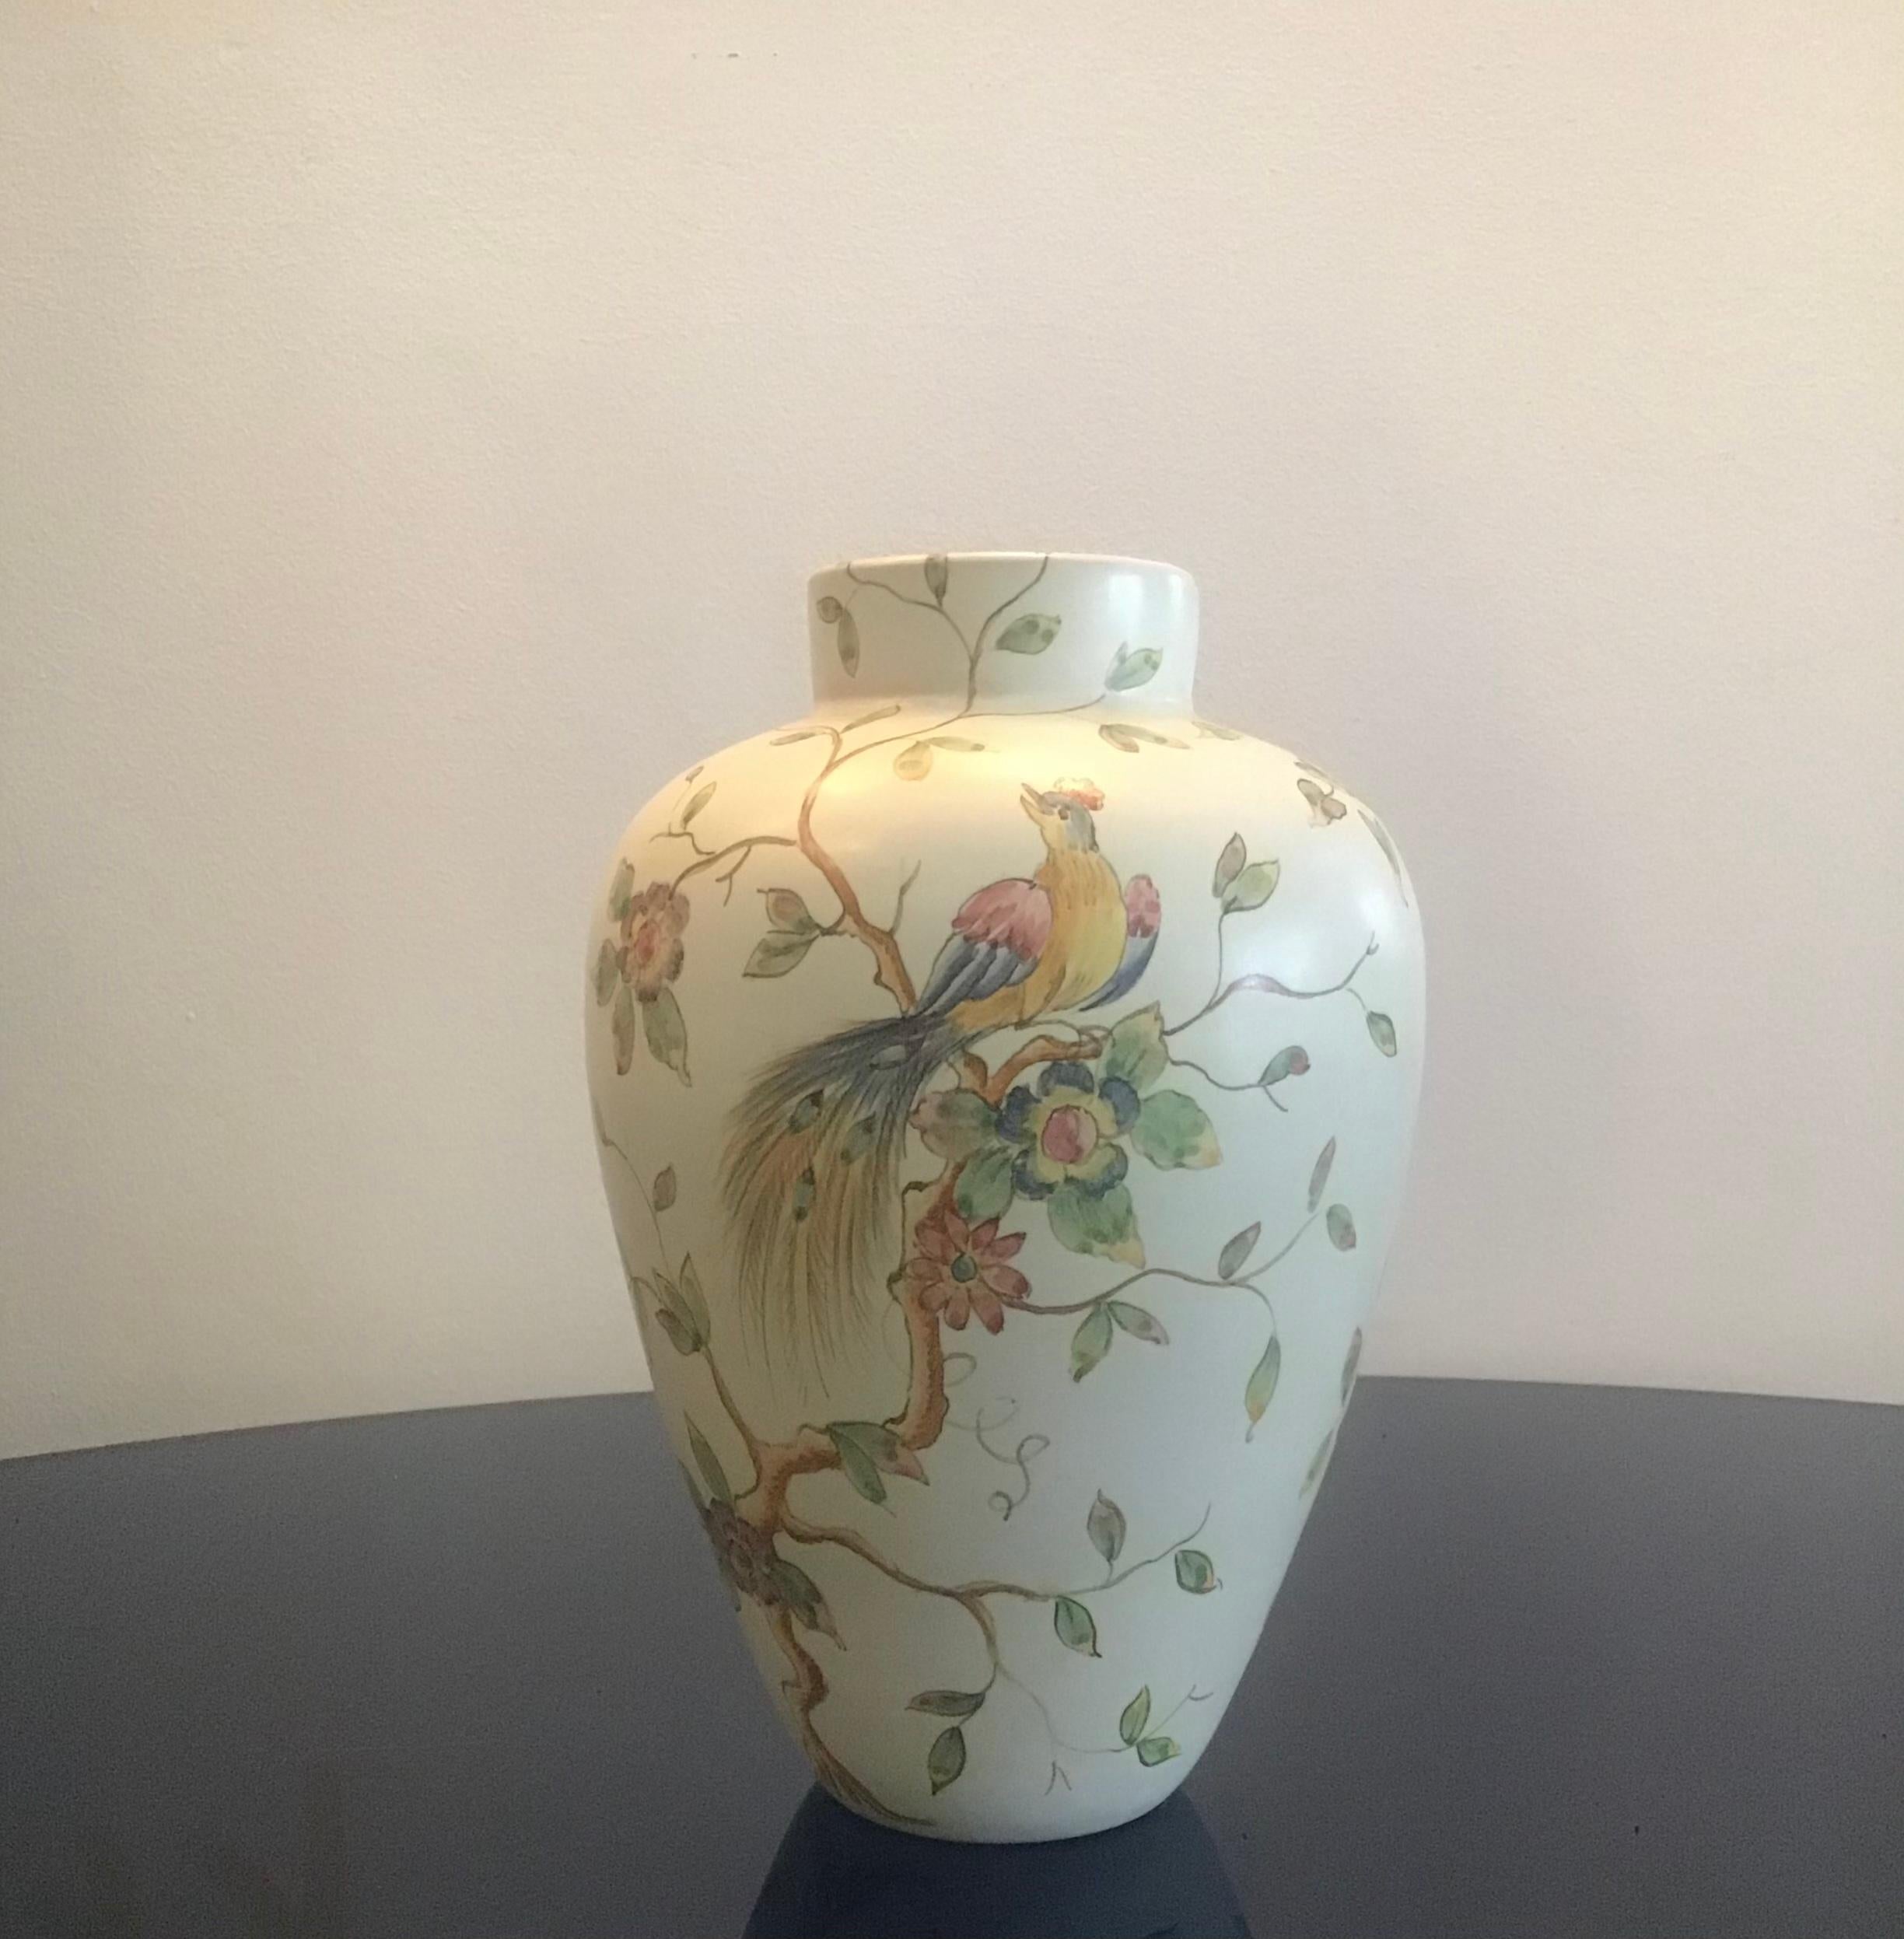 Santarelli “ Gualdo Tadino” vase ceramic 1940; Italy.